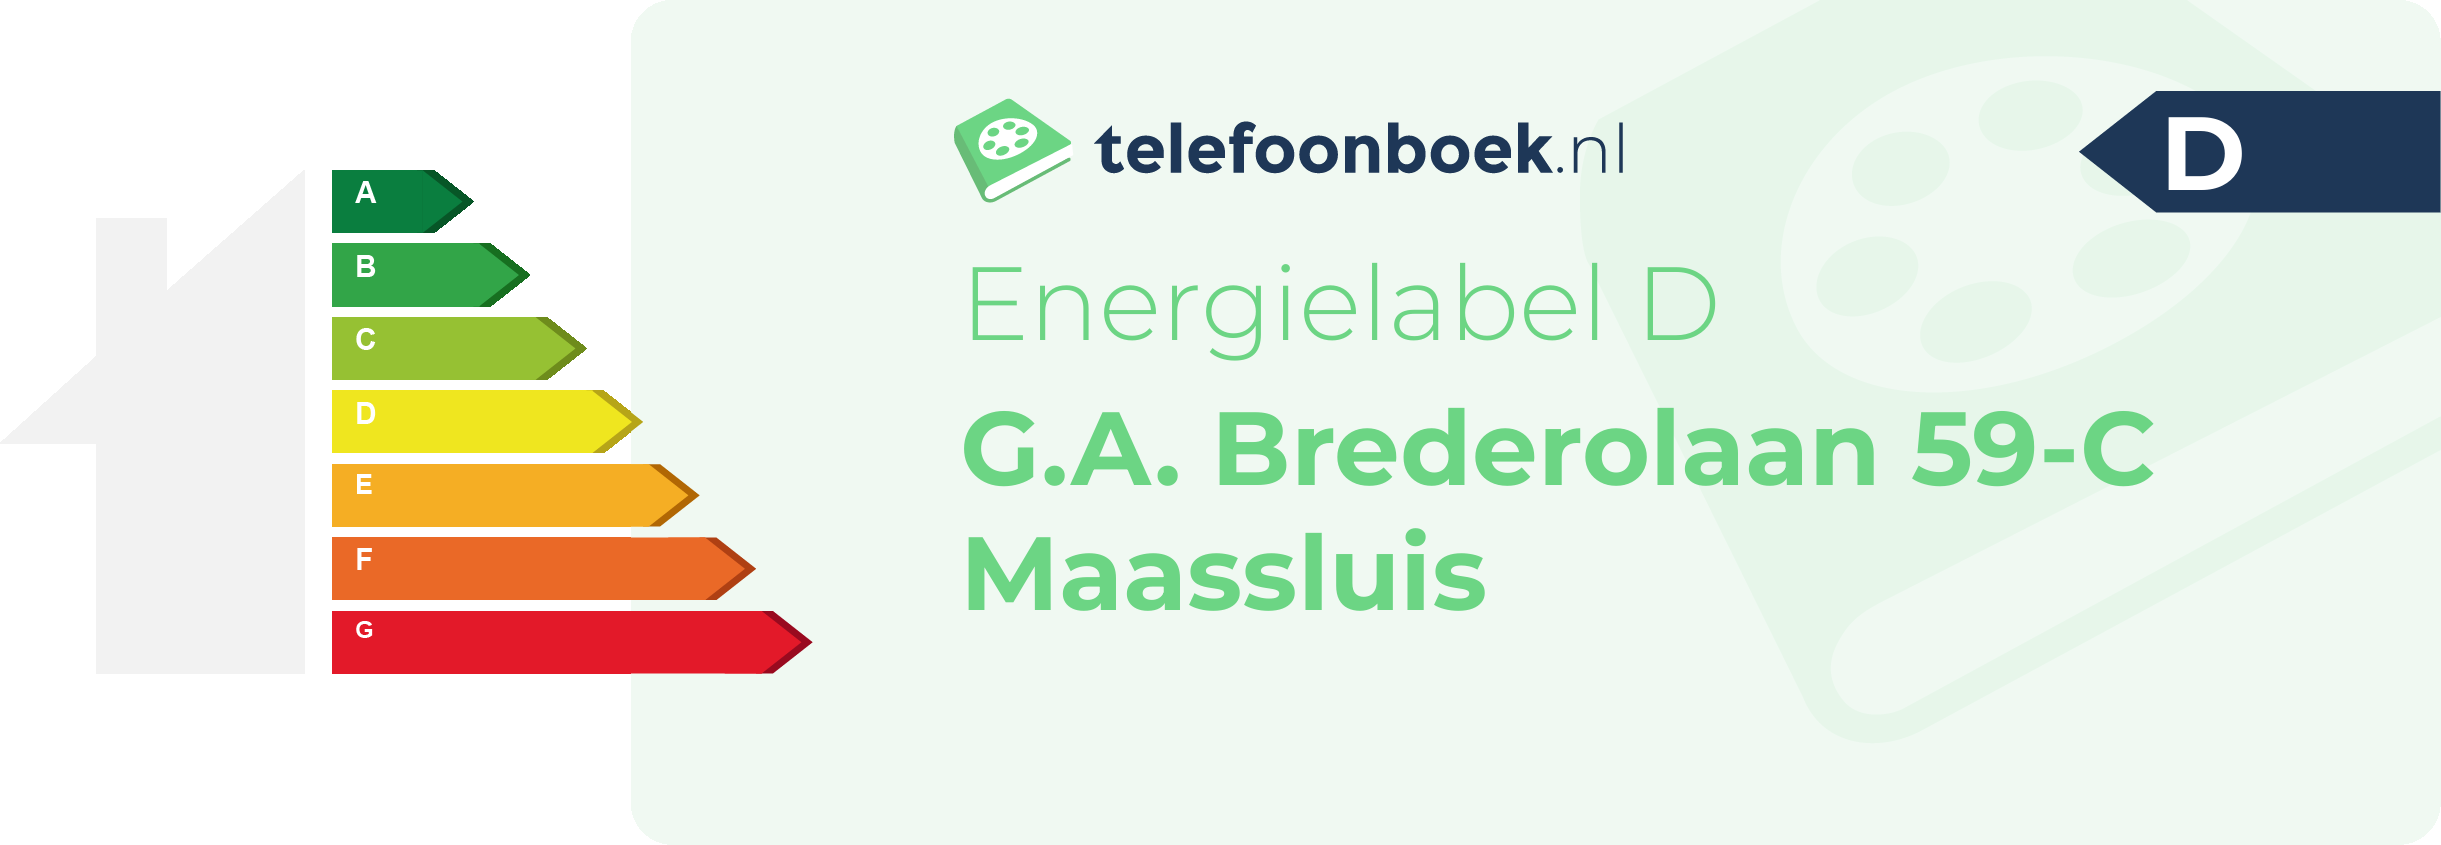 Energielabel G.A. Brederolaan 59-C Maassluis